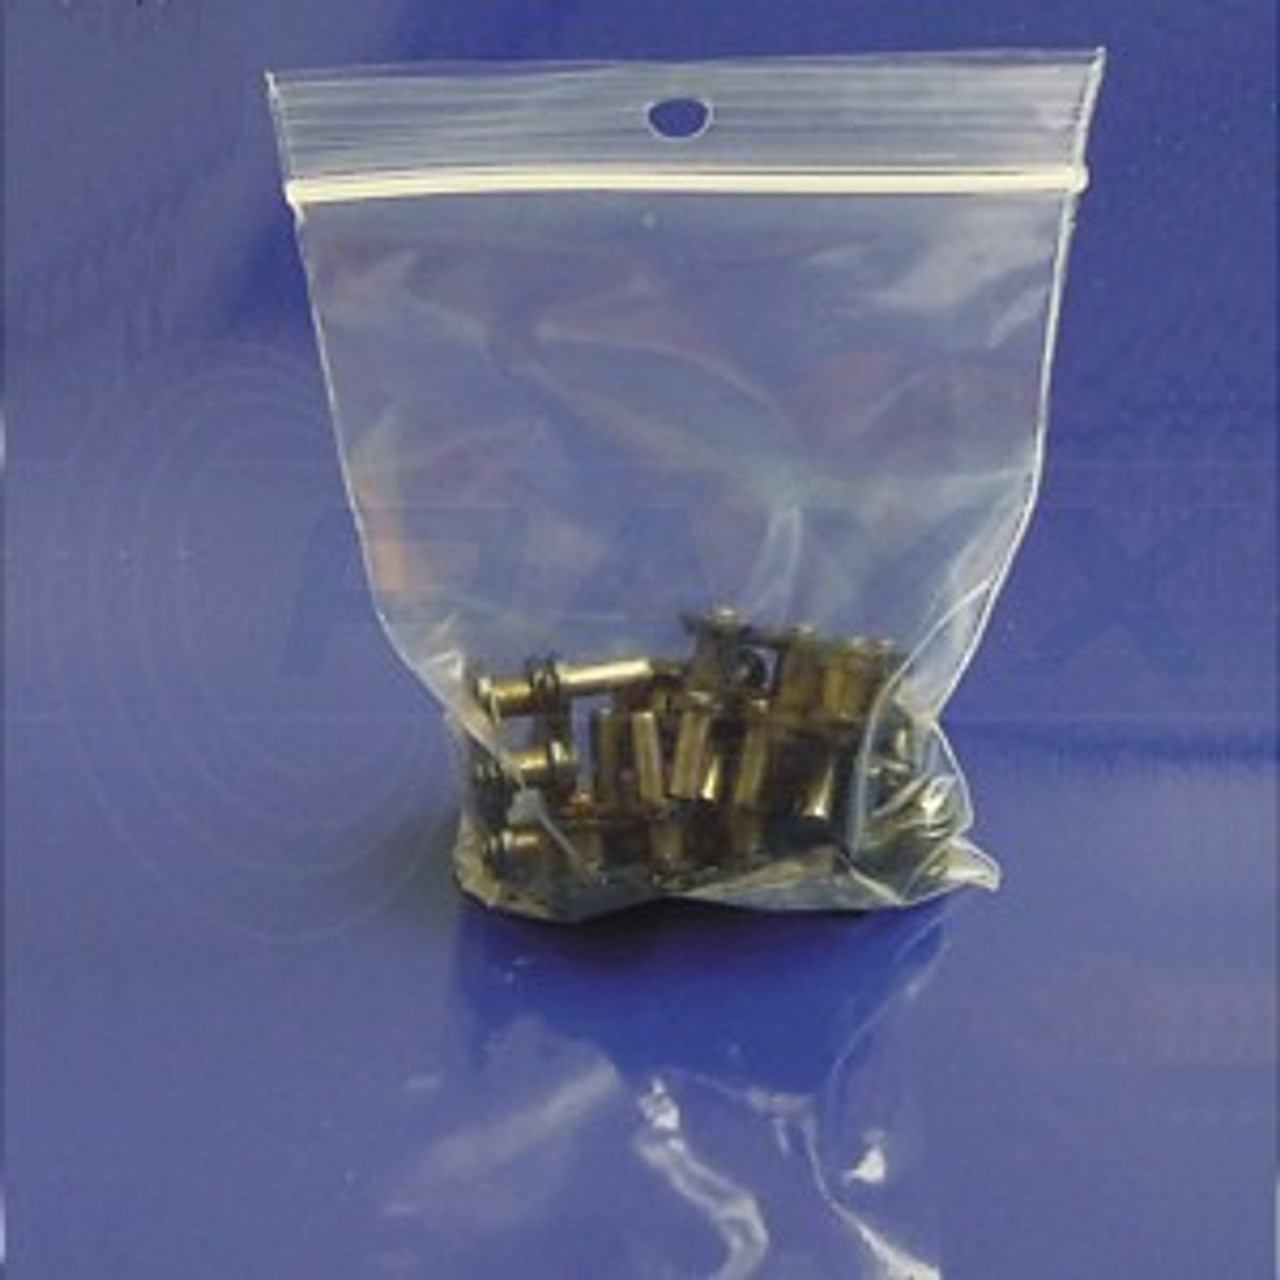 6" x 10" Re-closable Zip Lock Bags 2mil price per 100